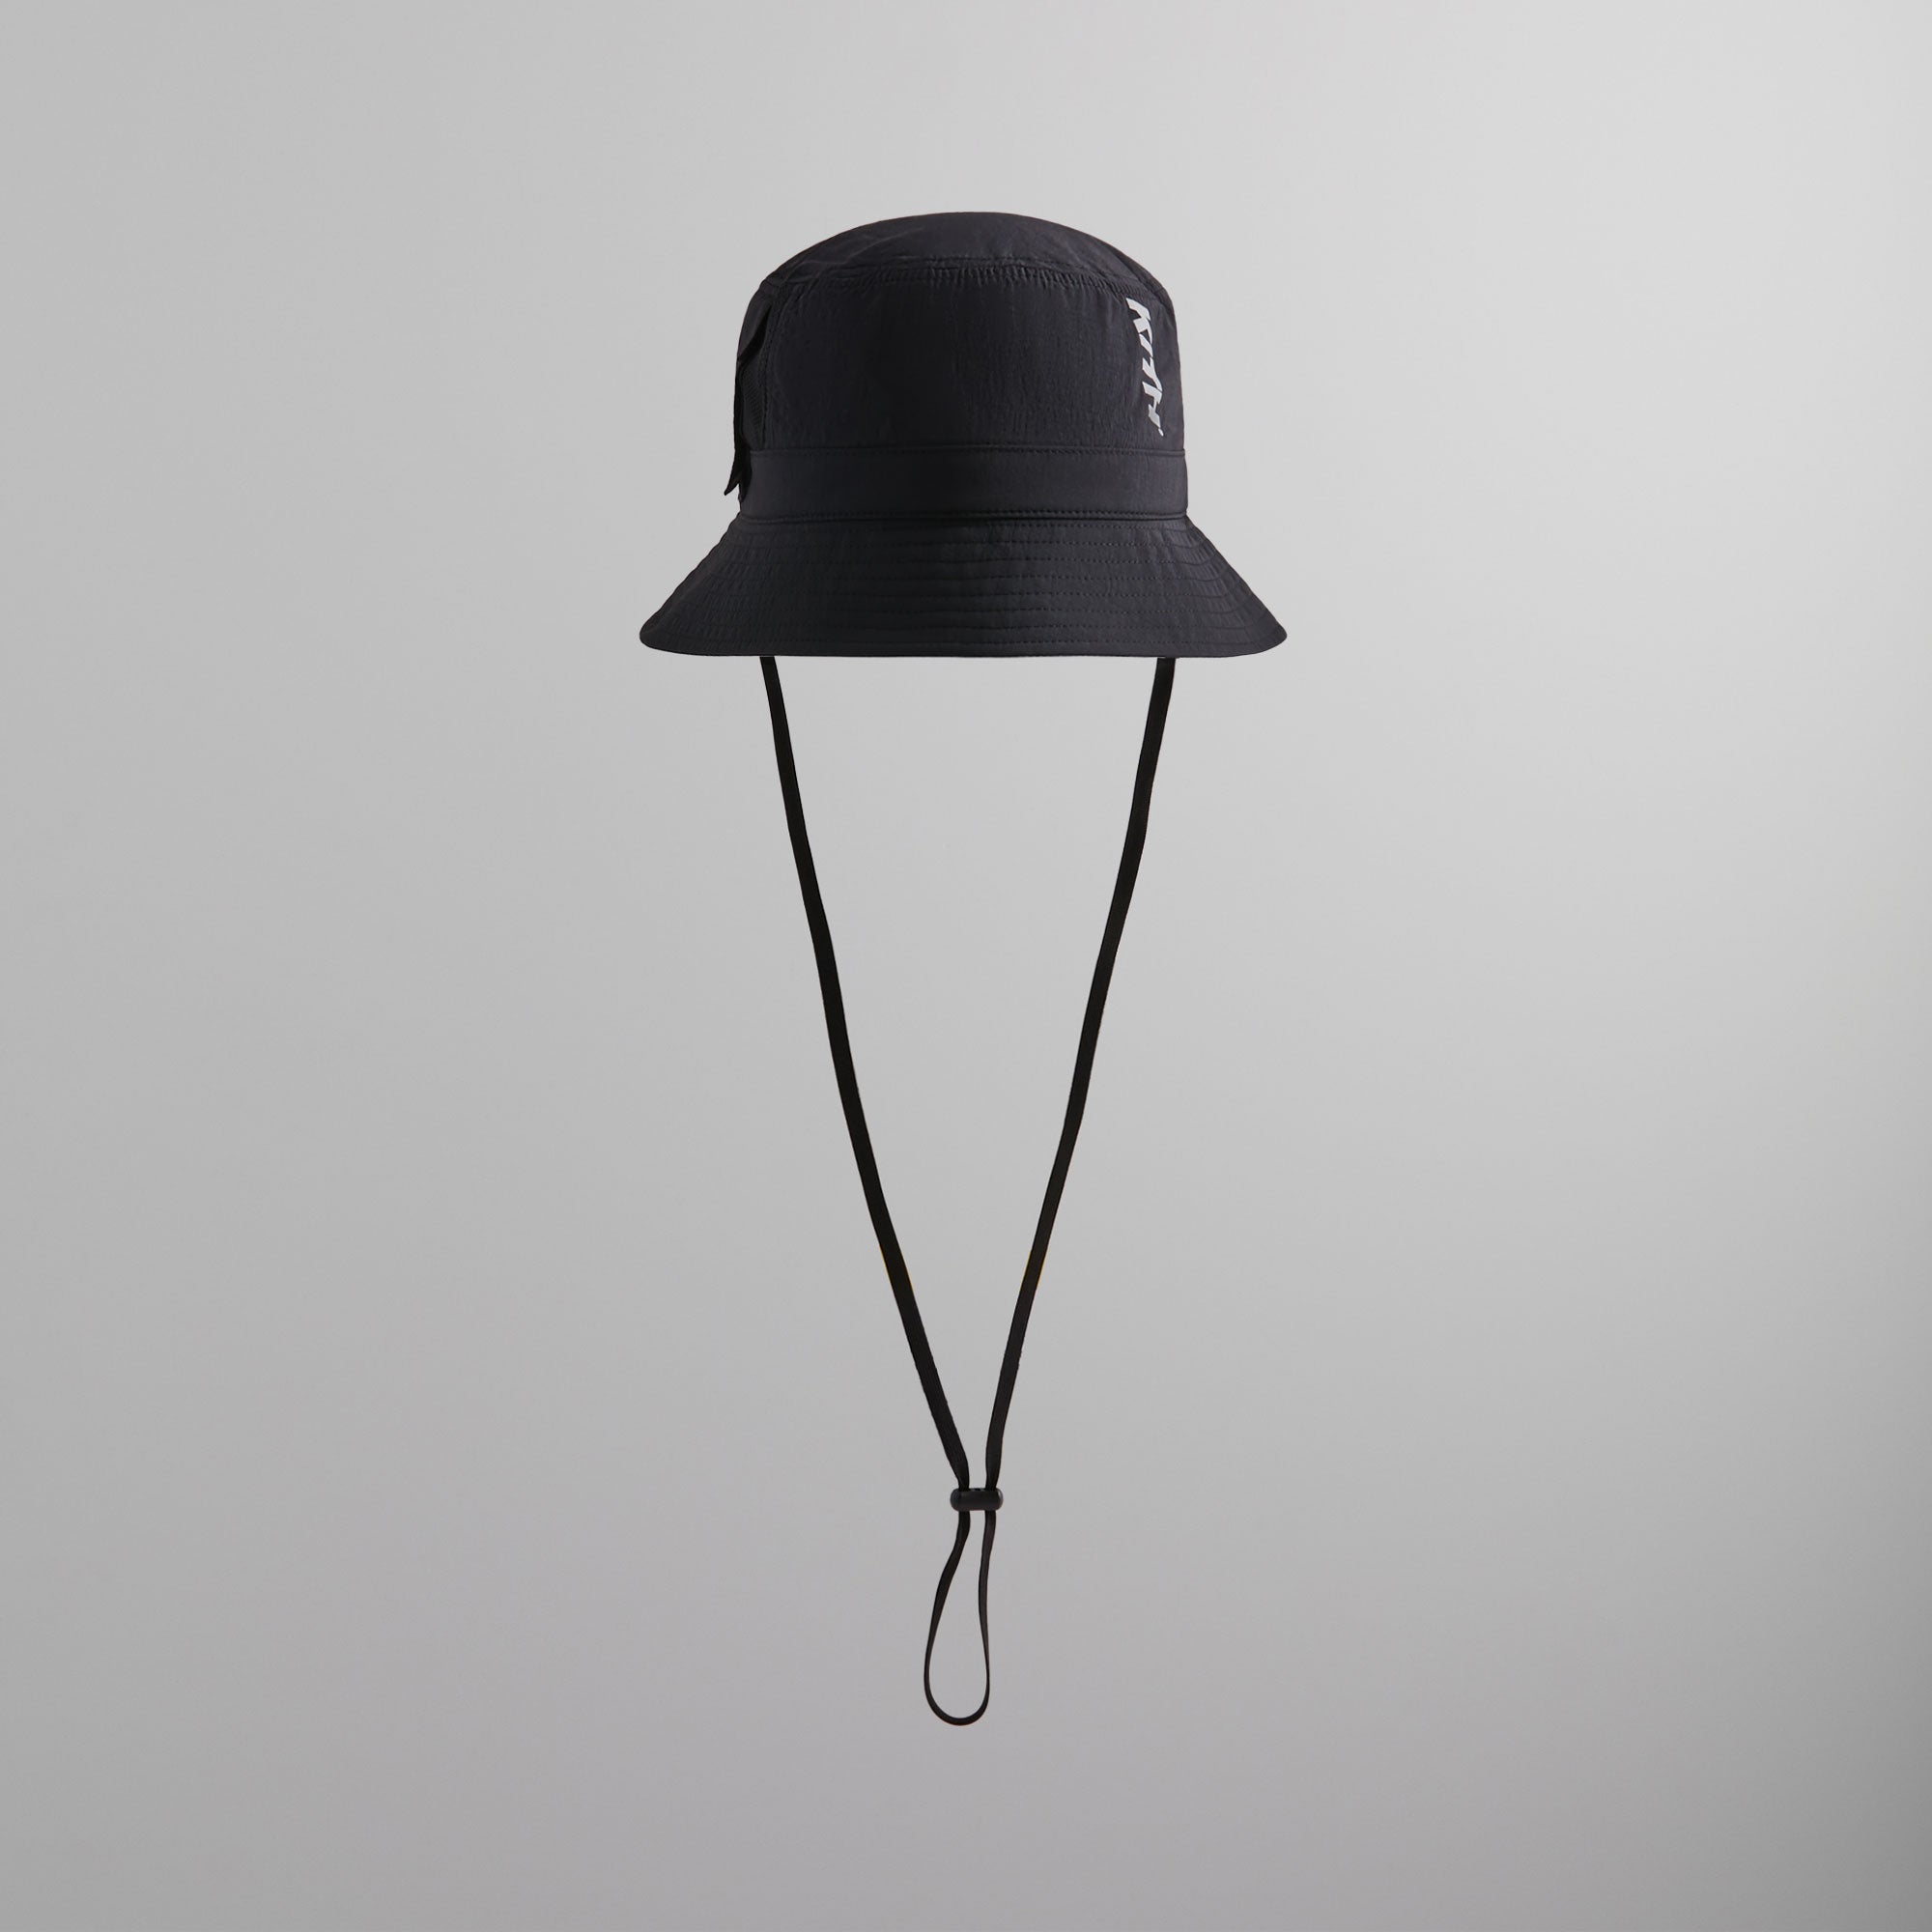 Kith Bagwell Nylon Utility Bucket Hat - Black